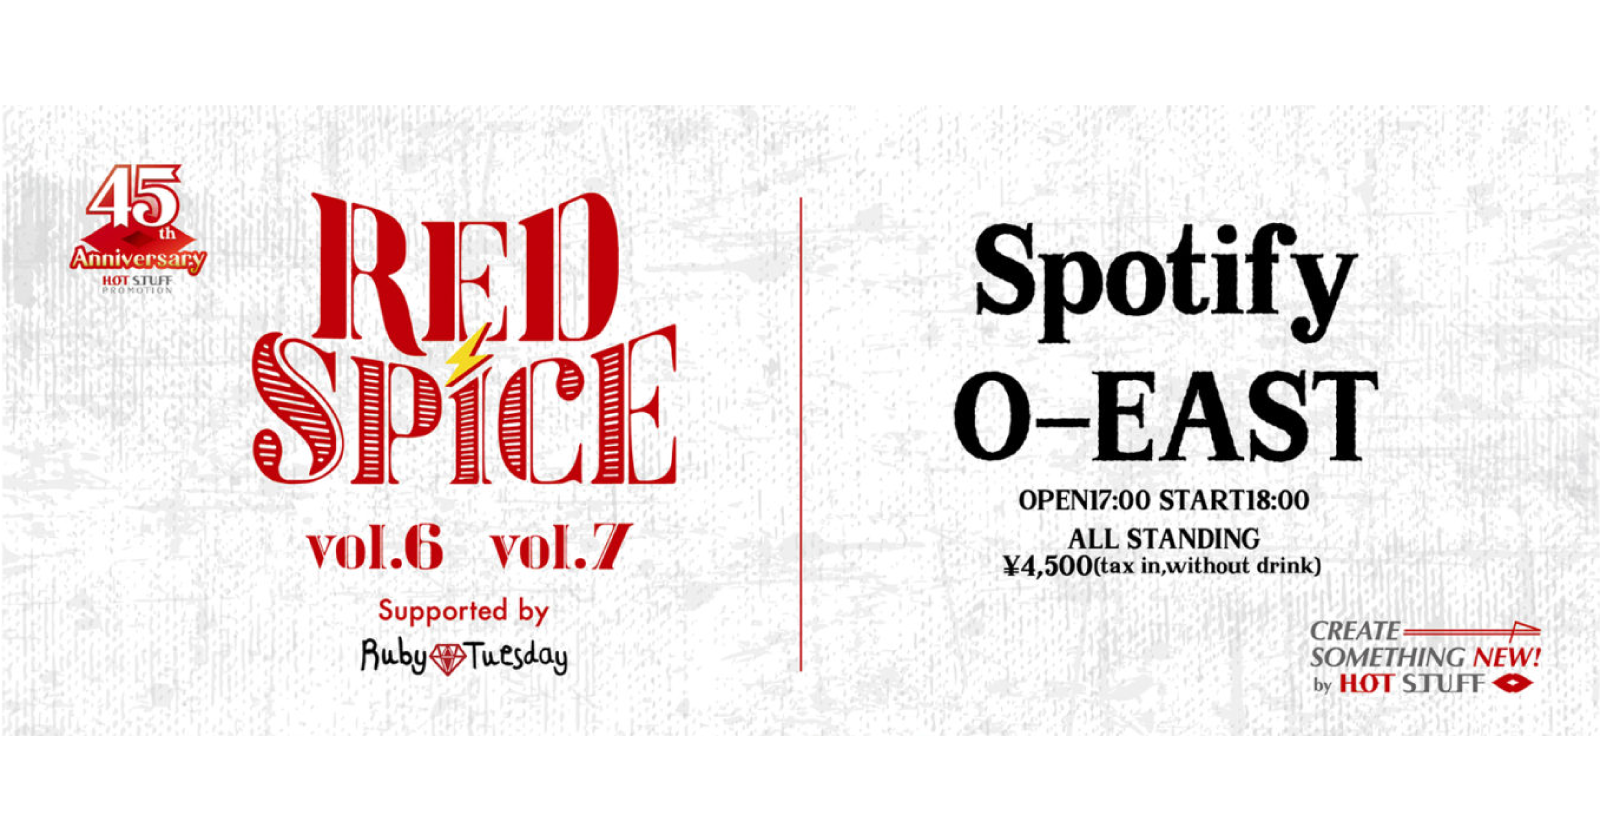 HOT STUFF 45th Anniversary RED SPICE vol.7